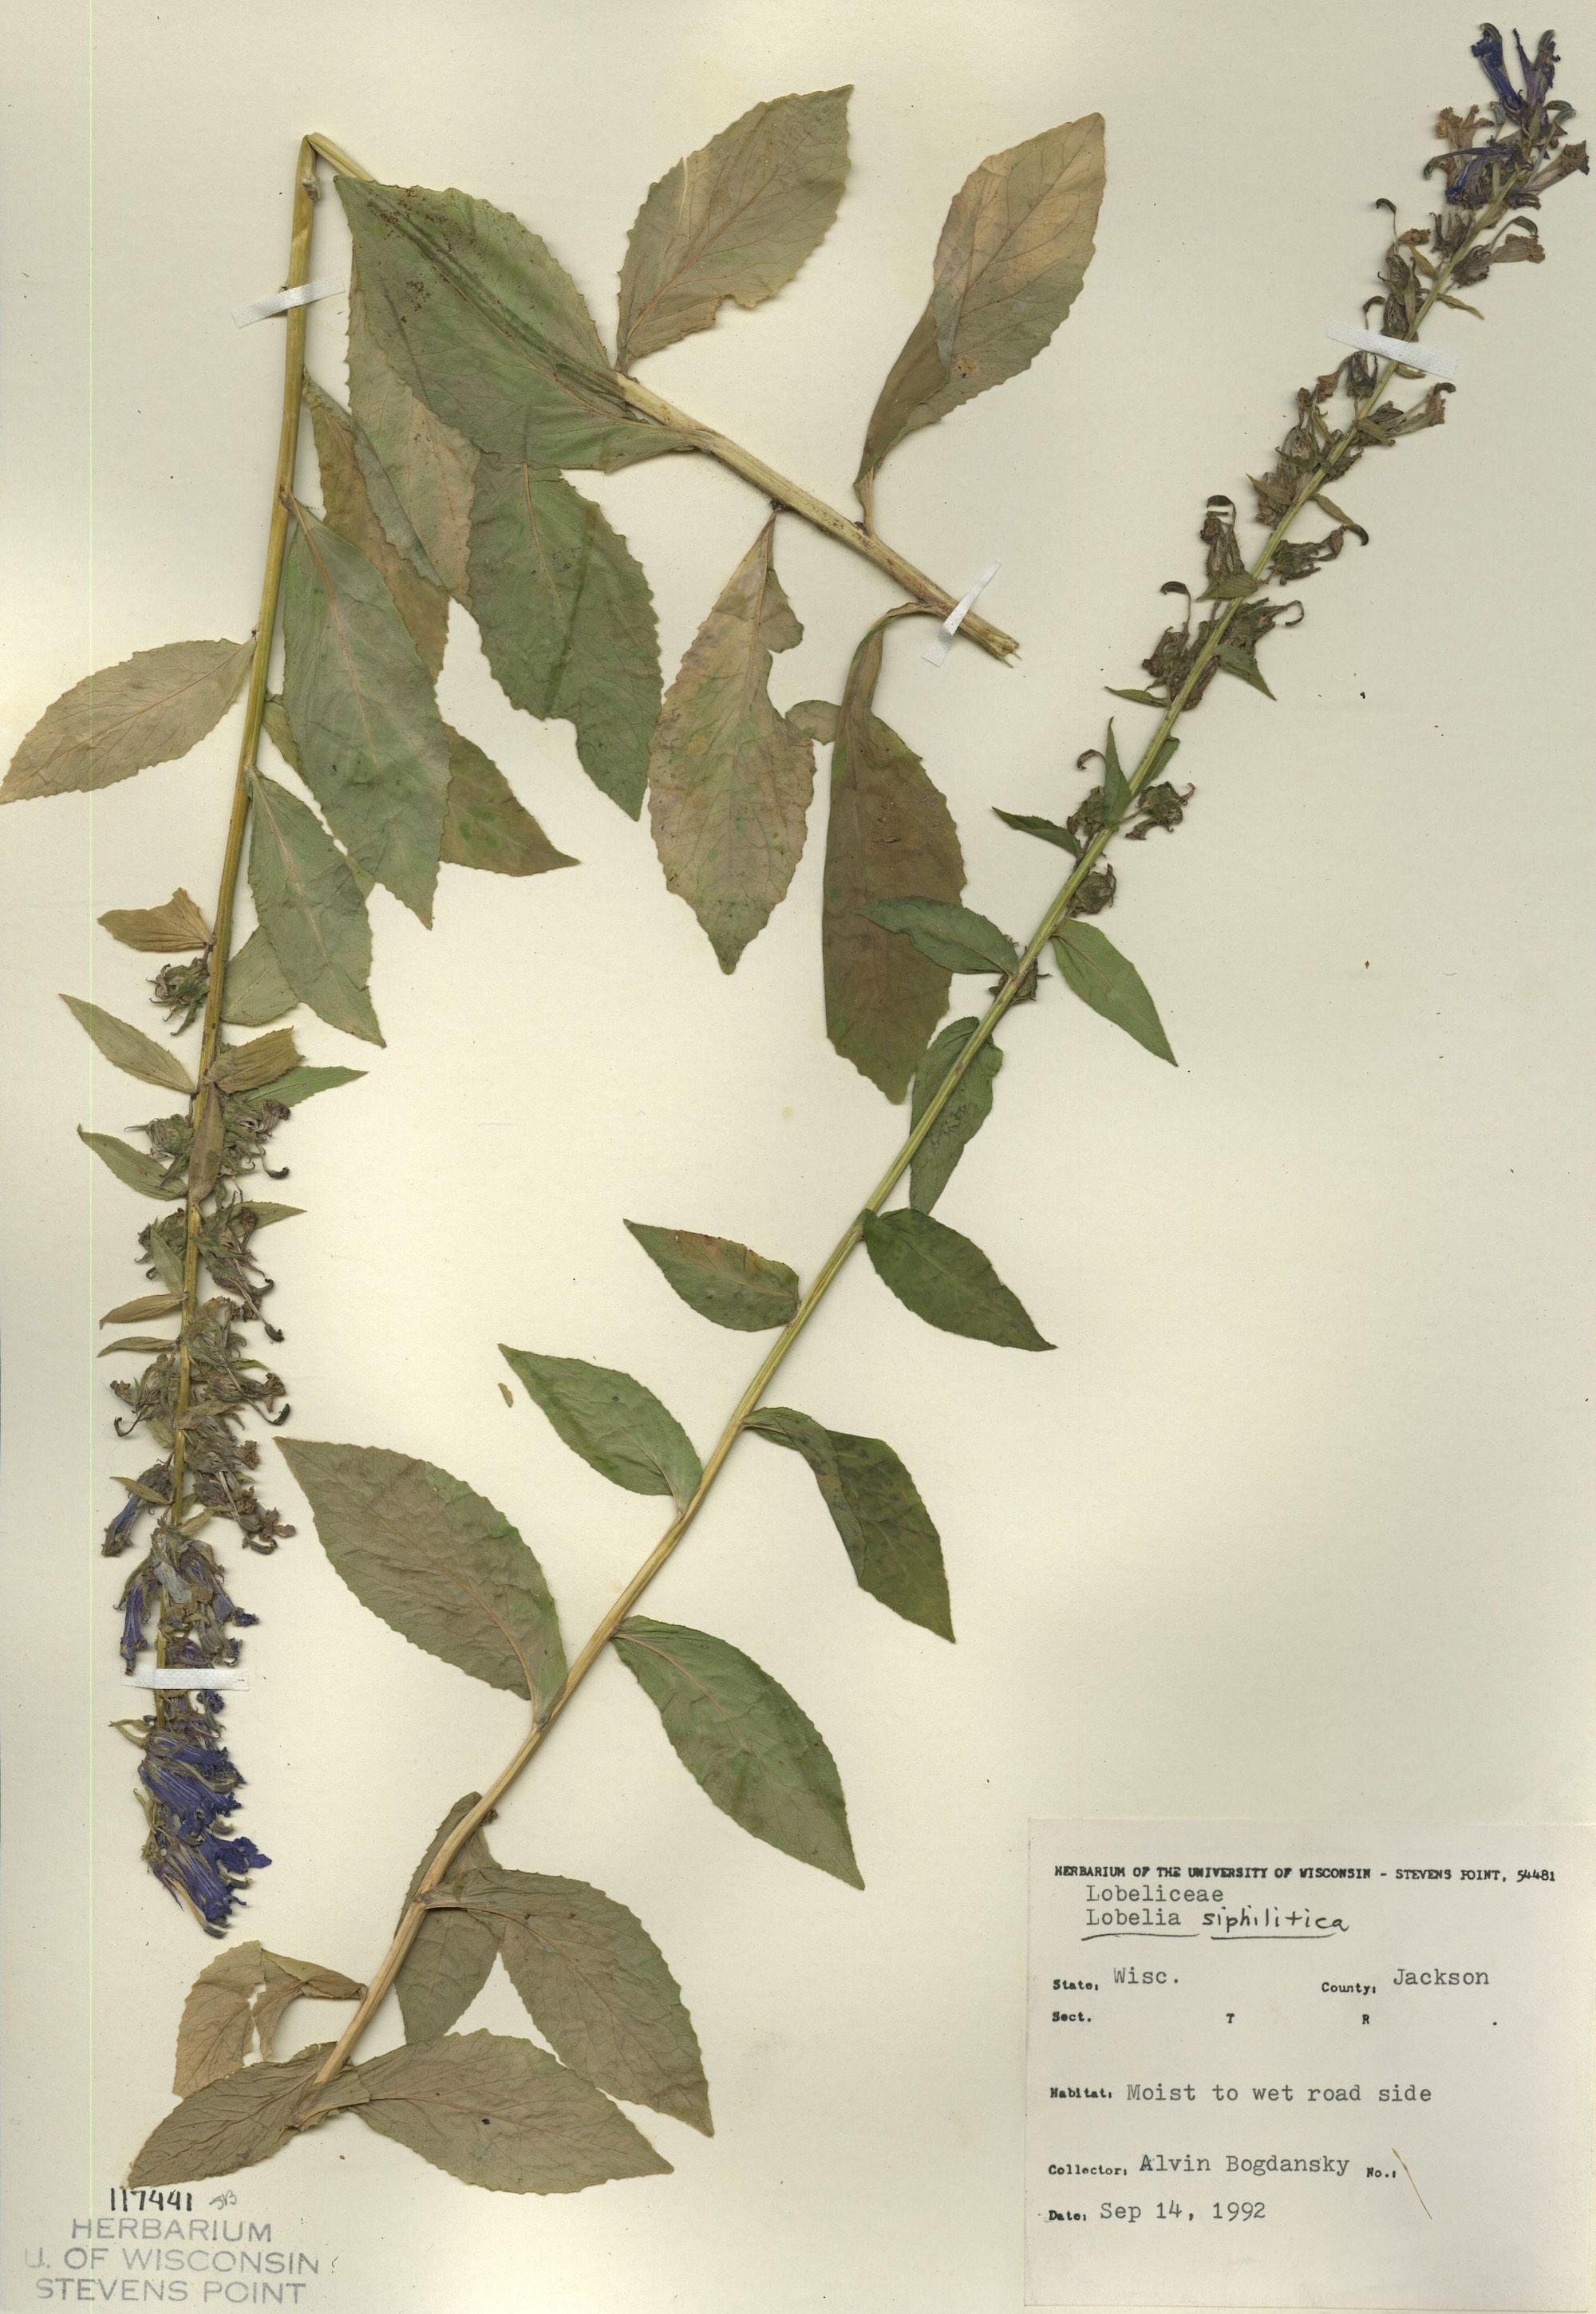 Blue Lobelia specimen collected in Jackson County, Wisconsin on September 14, 1992.